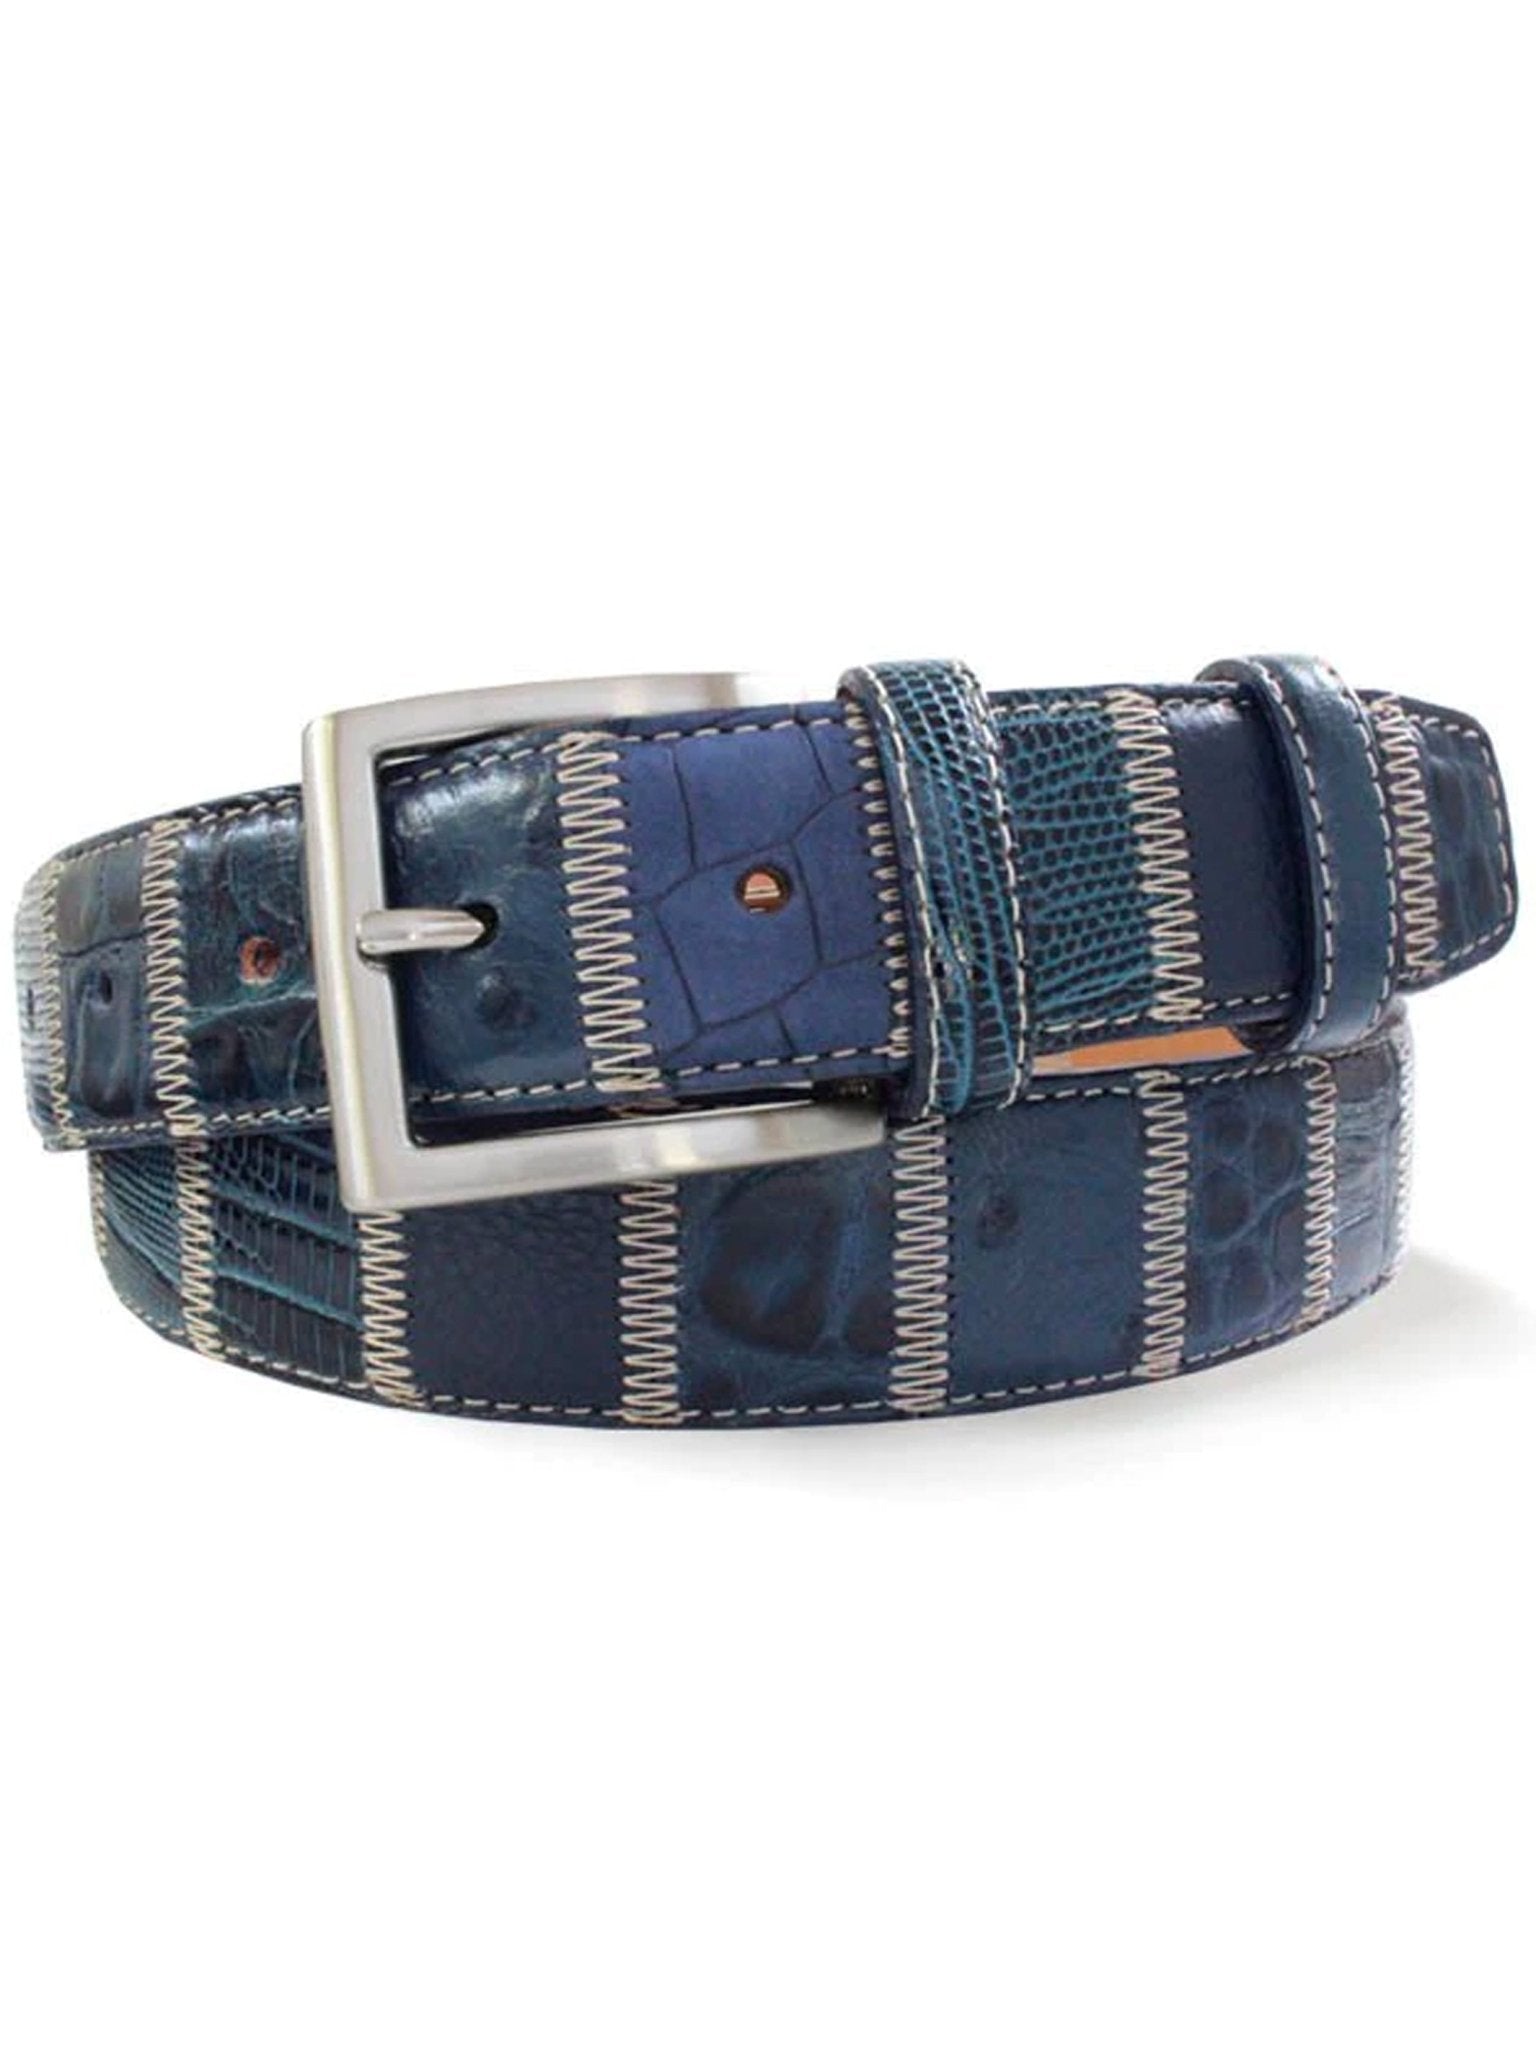 4elementsclothingRobert CharlesRobert Charles Belts - 1609 Patchwork Blue Mens Leather Belt 40mm - Made in Italy - 100% LeatherBelts1609/40/S